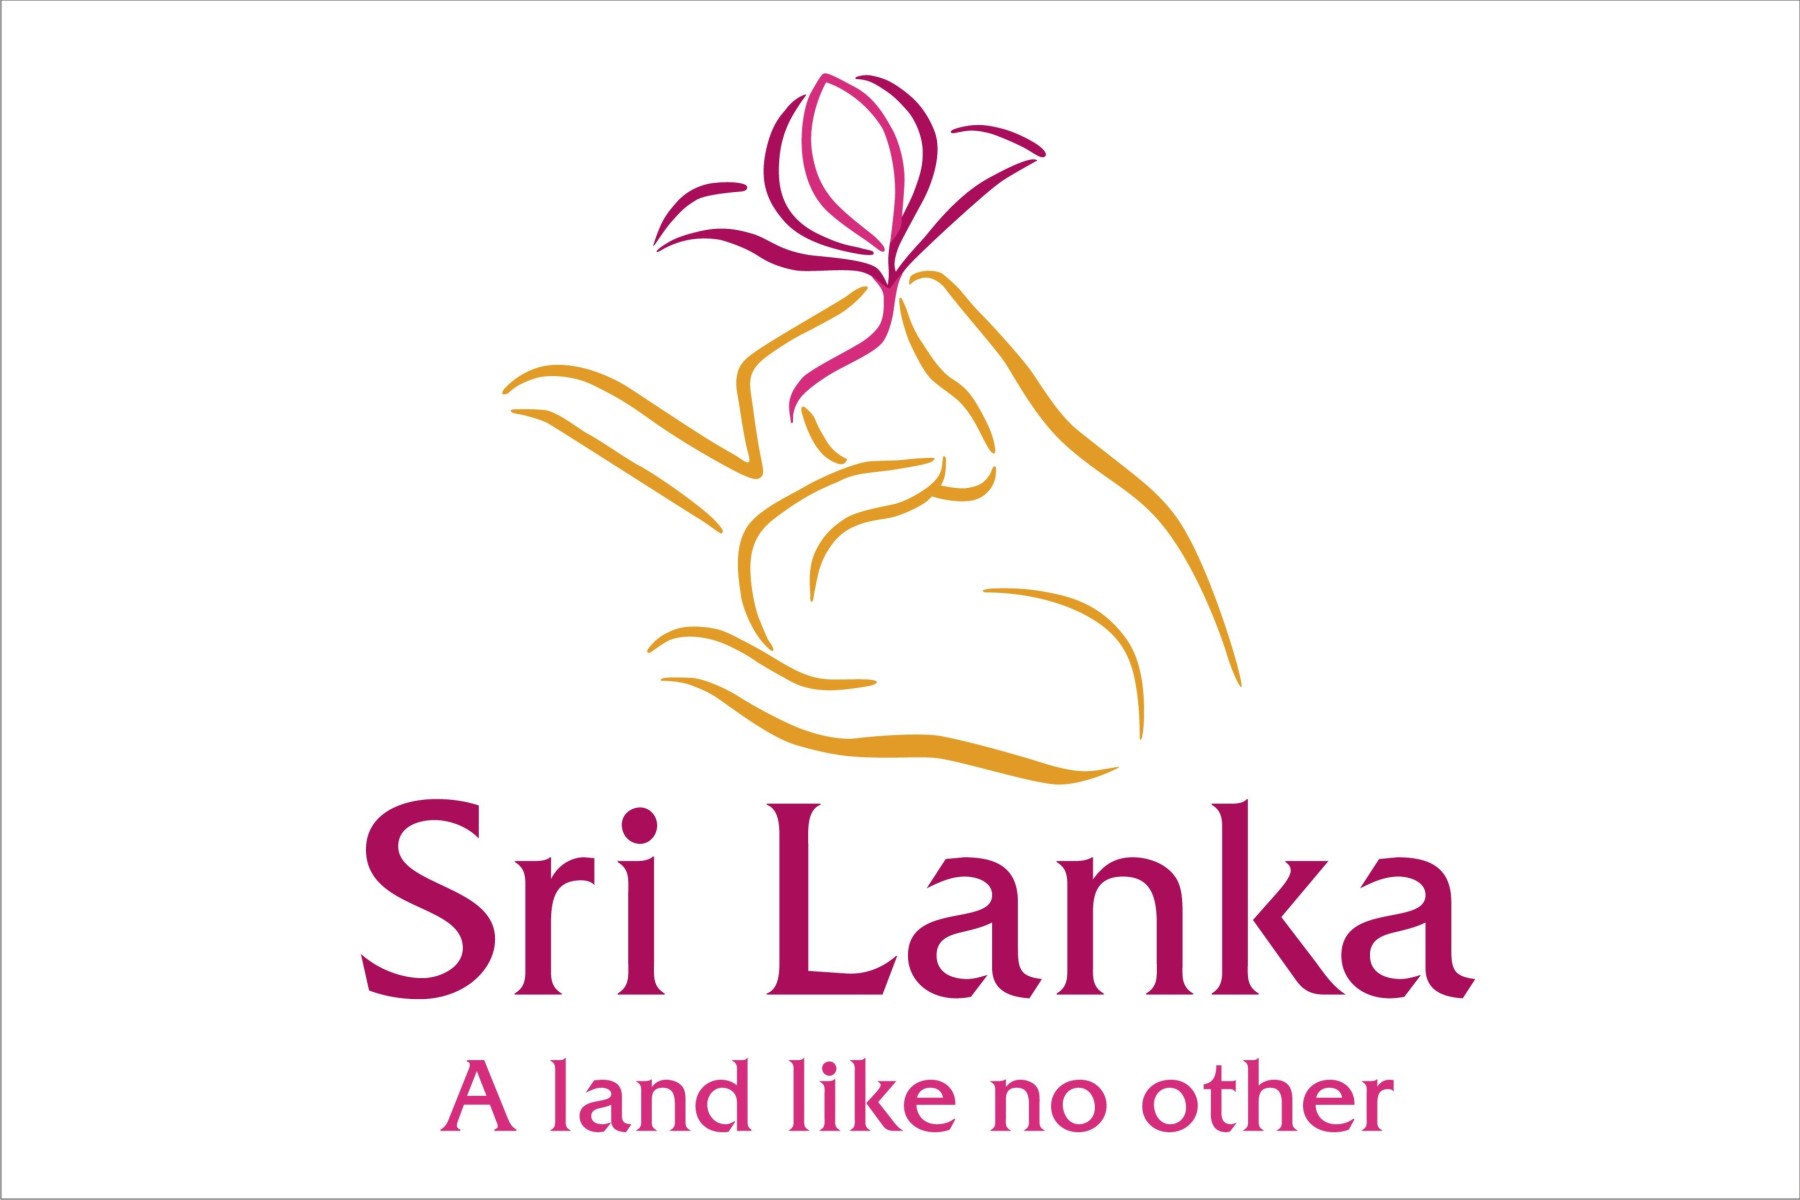 Welcome to Sri Lanka!